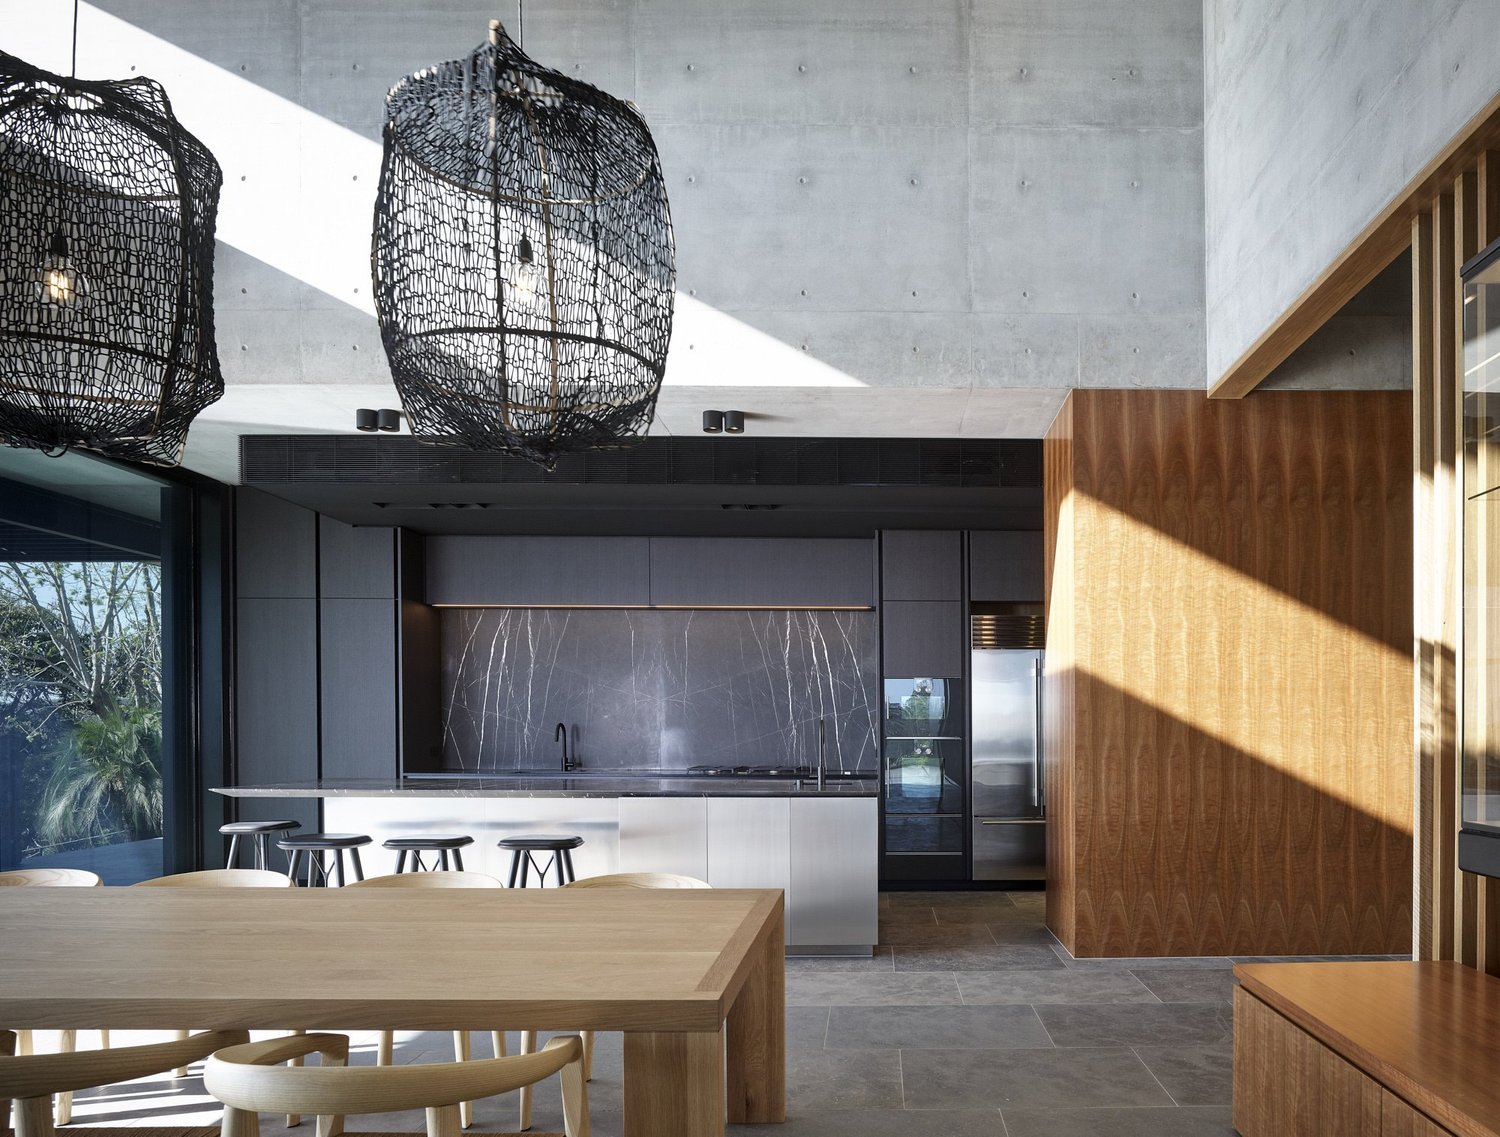 shaun-lockyer-architects-onedin-kitchen-living-void-skylight-concrete.jpg